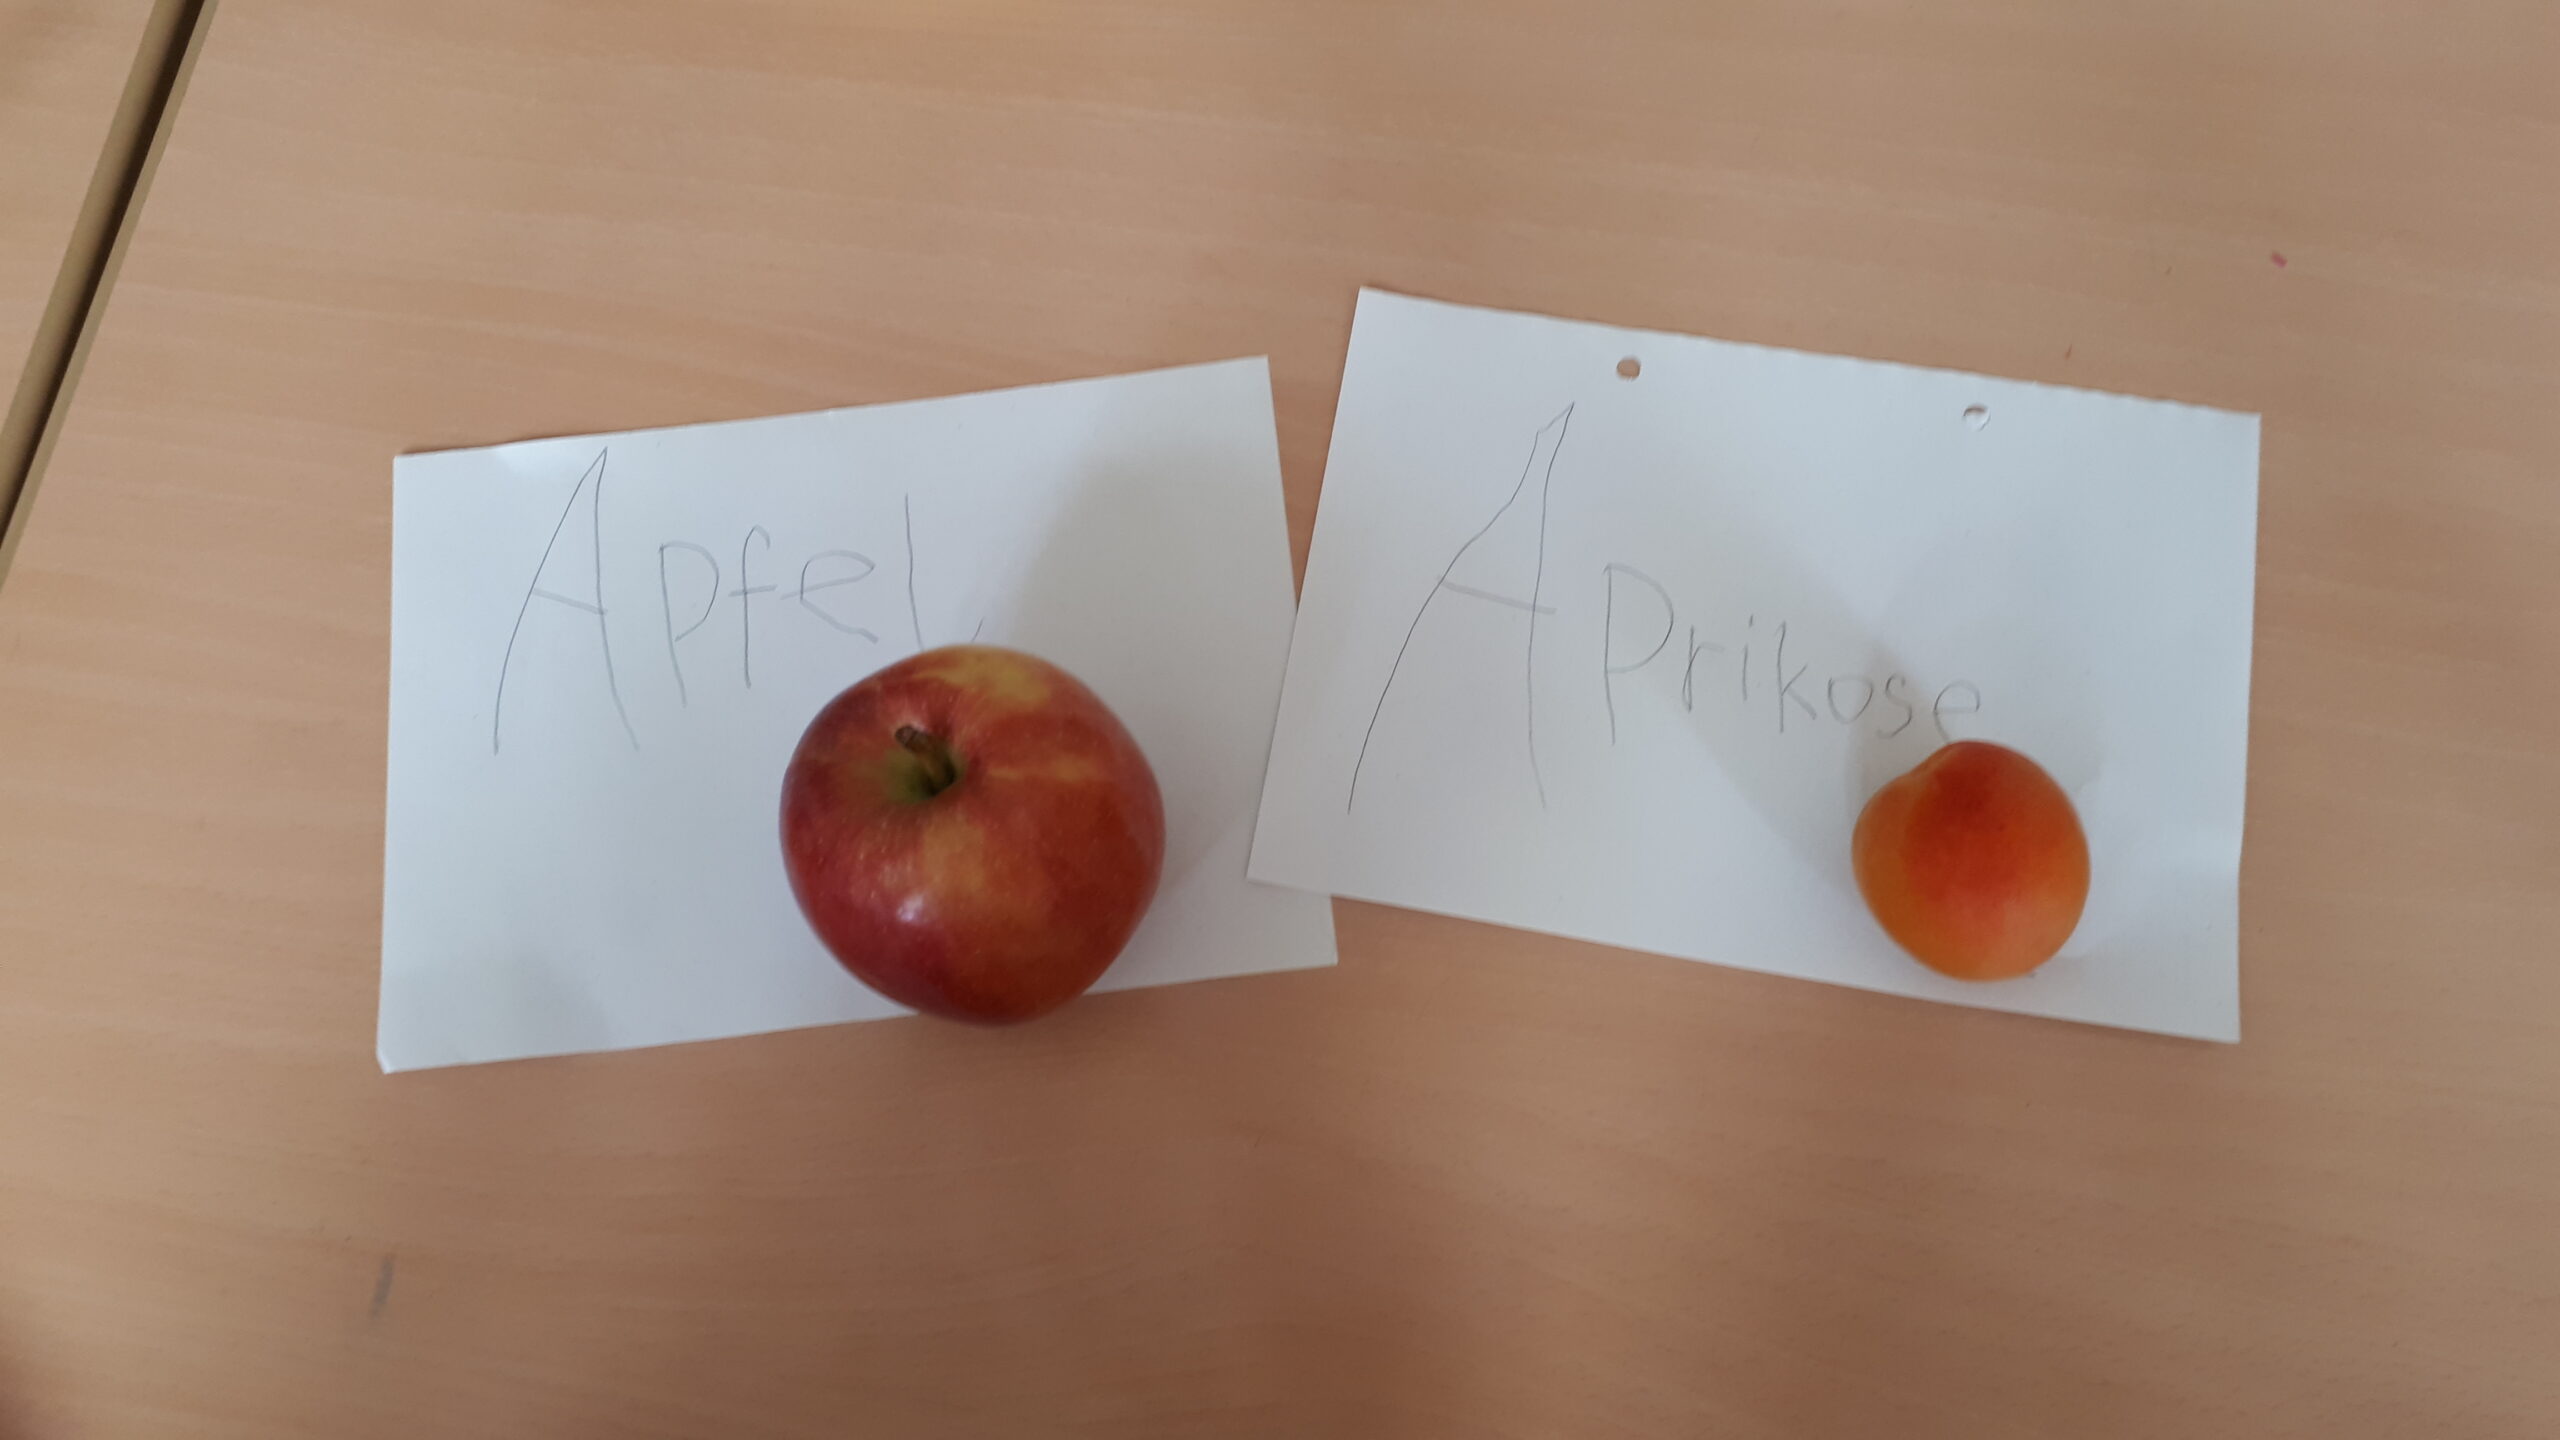 Apfel und Aprikose mit Plakat